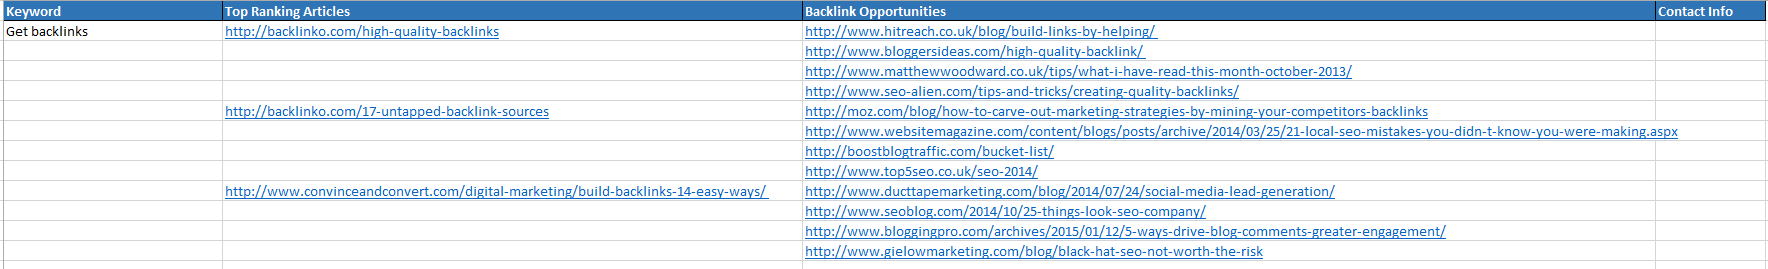 Backlinks Blog Promotion spreadsheet example